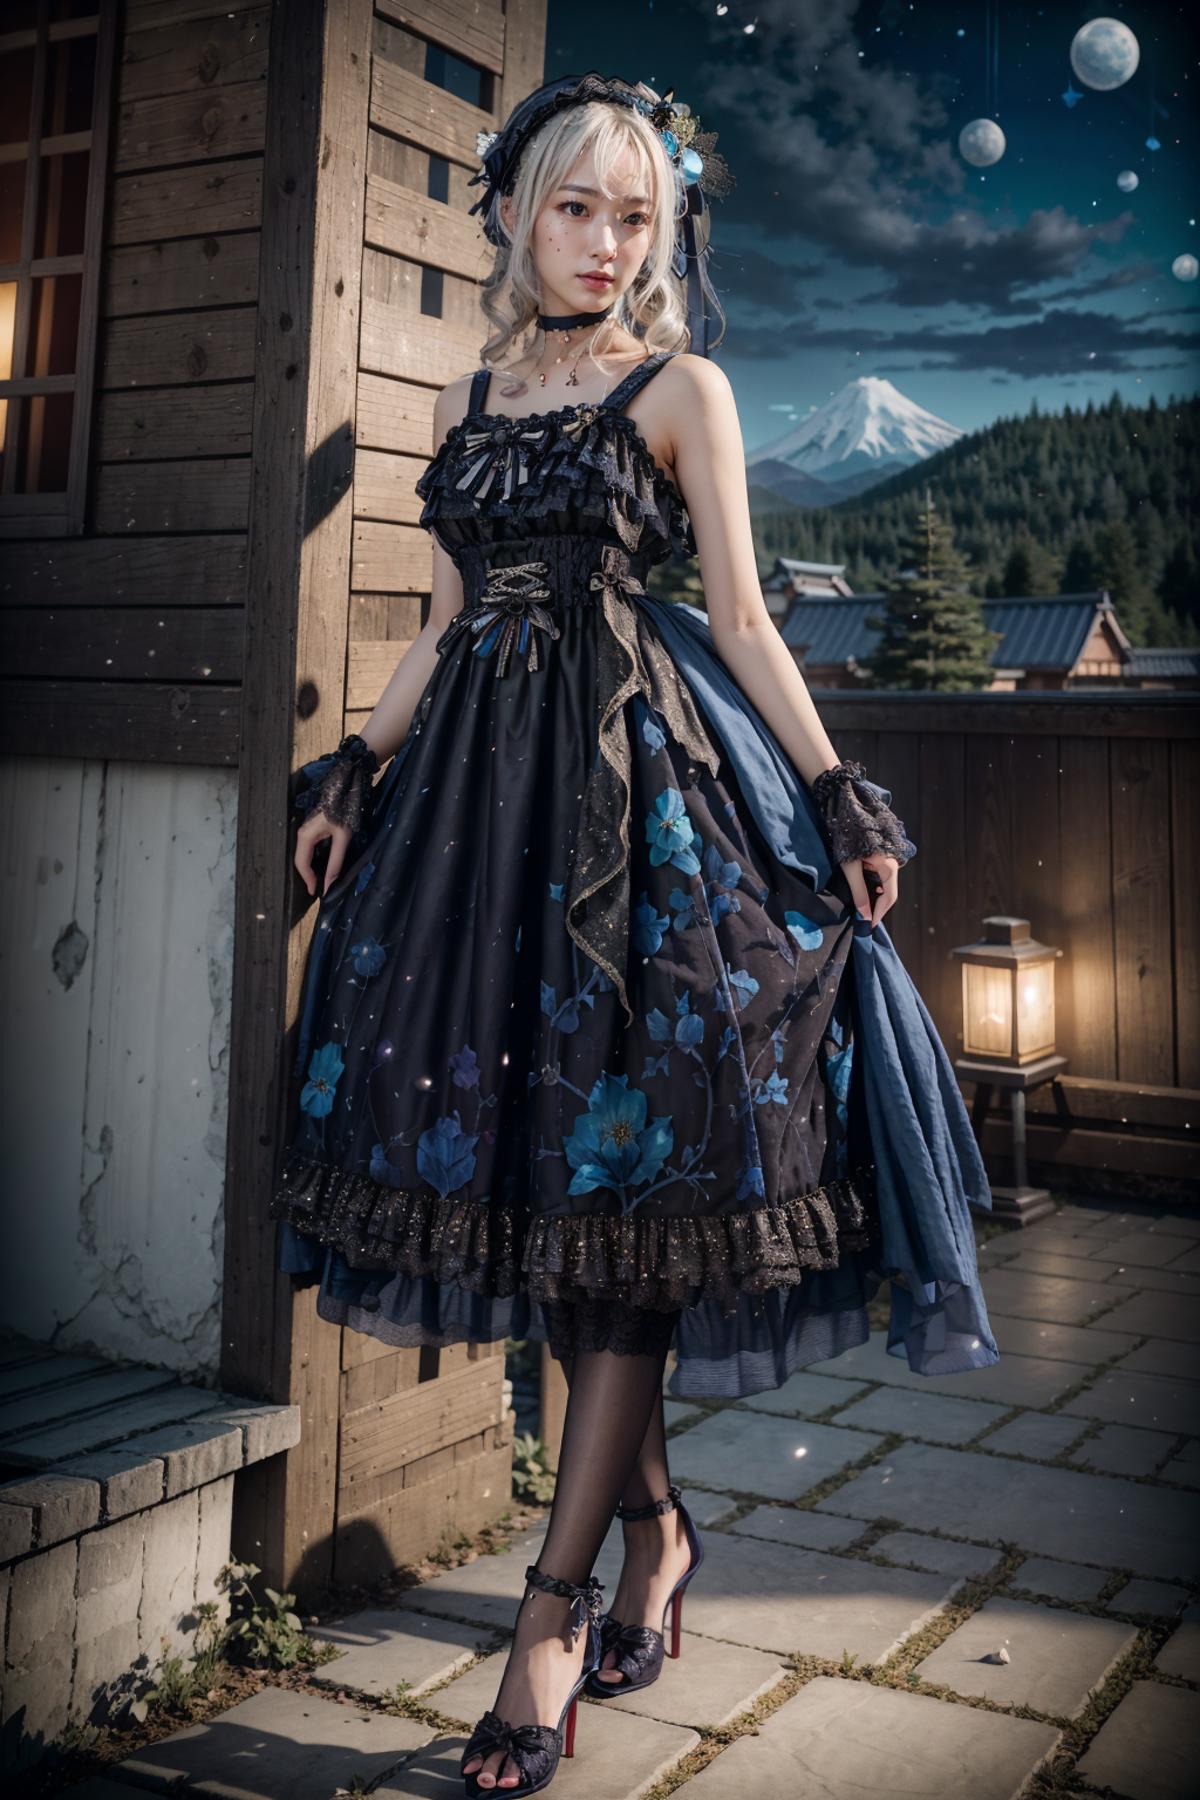 【星月浮灯】Dress No.17 Blue Dress image by feetie